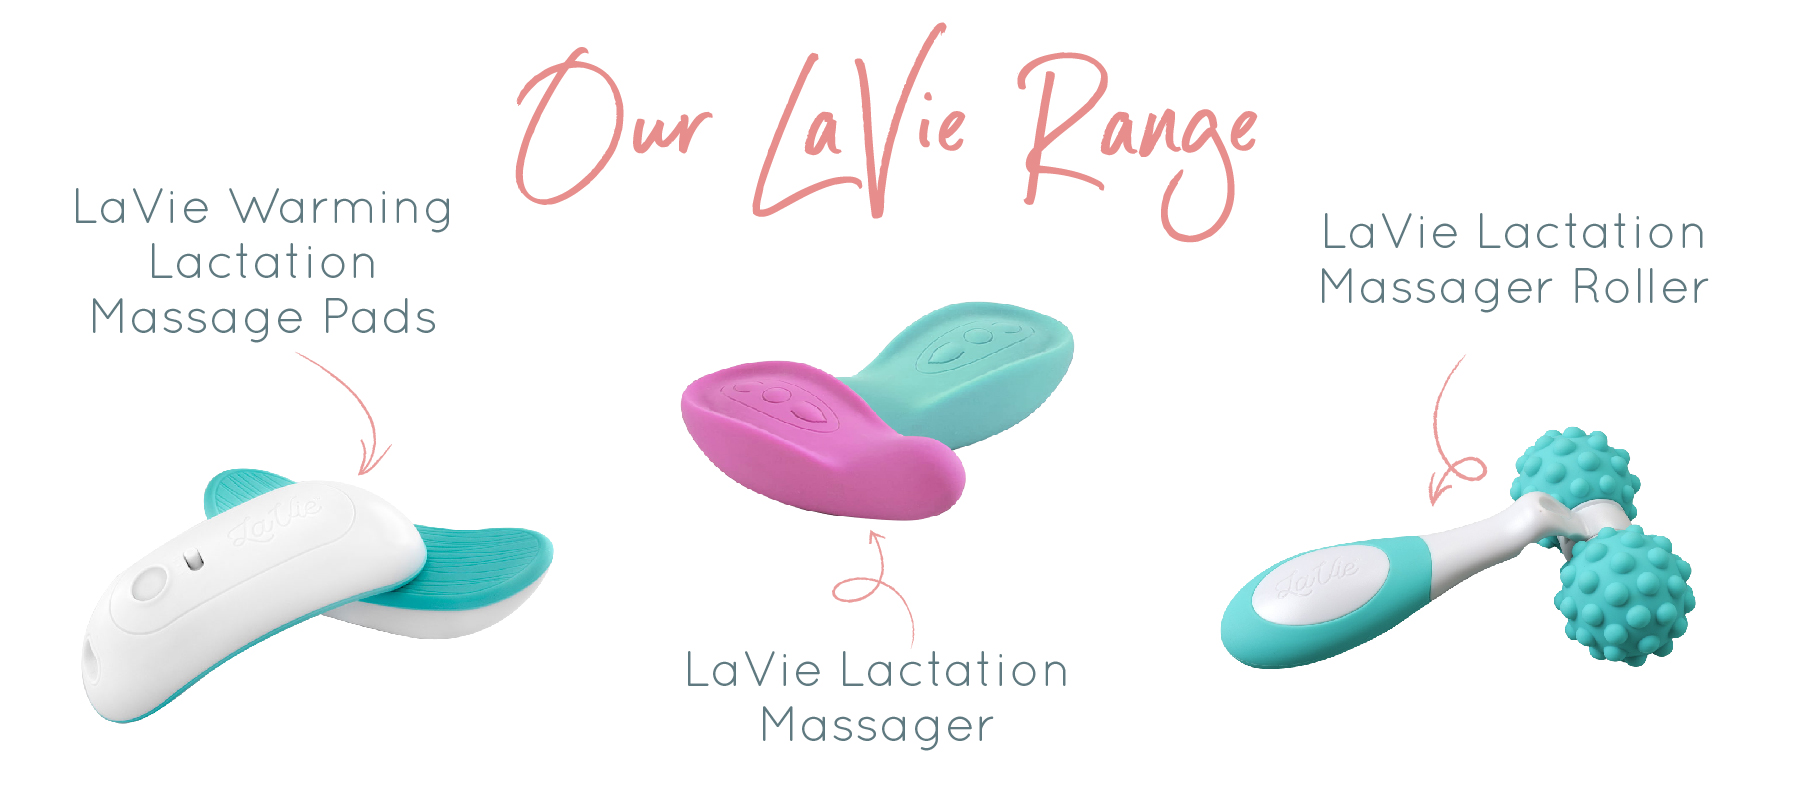 LaVie Lactation Massager for Breastfeeding, Nursing, Pumping, Support for  Clogged Ducts, Mastitis, Engorgement, Improves Milk Fl